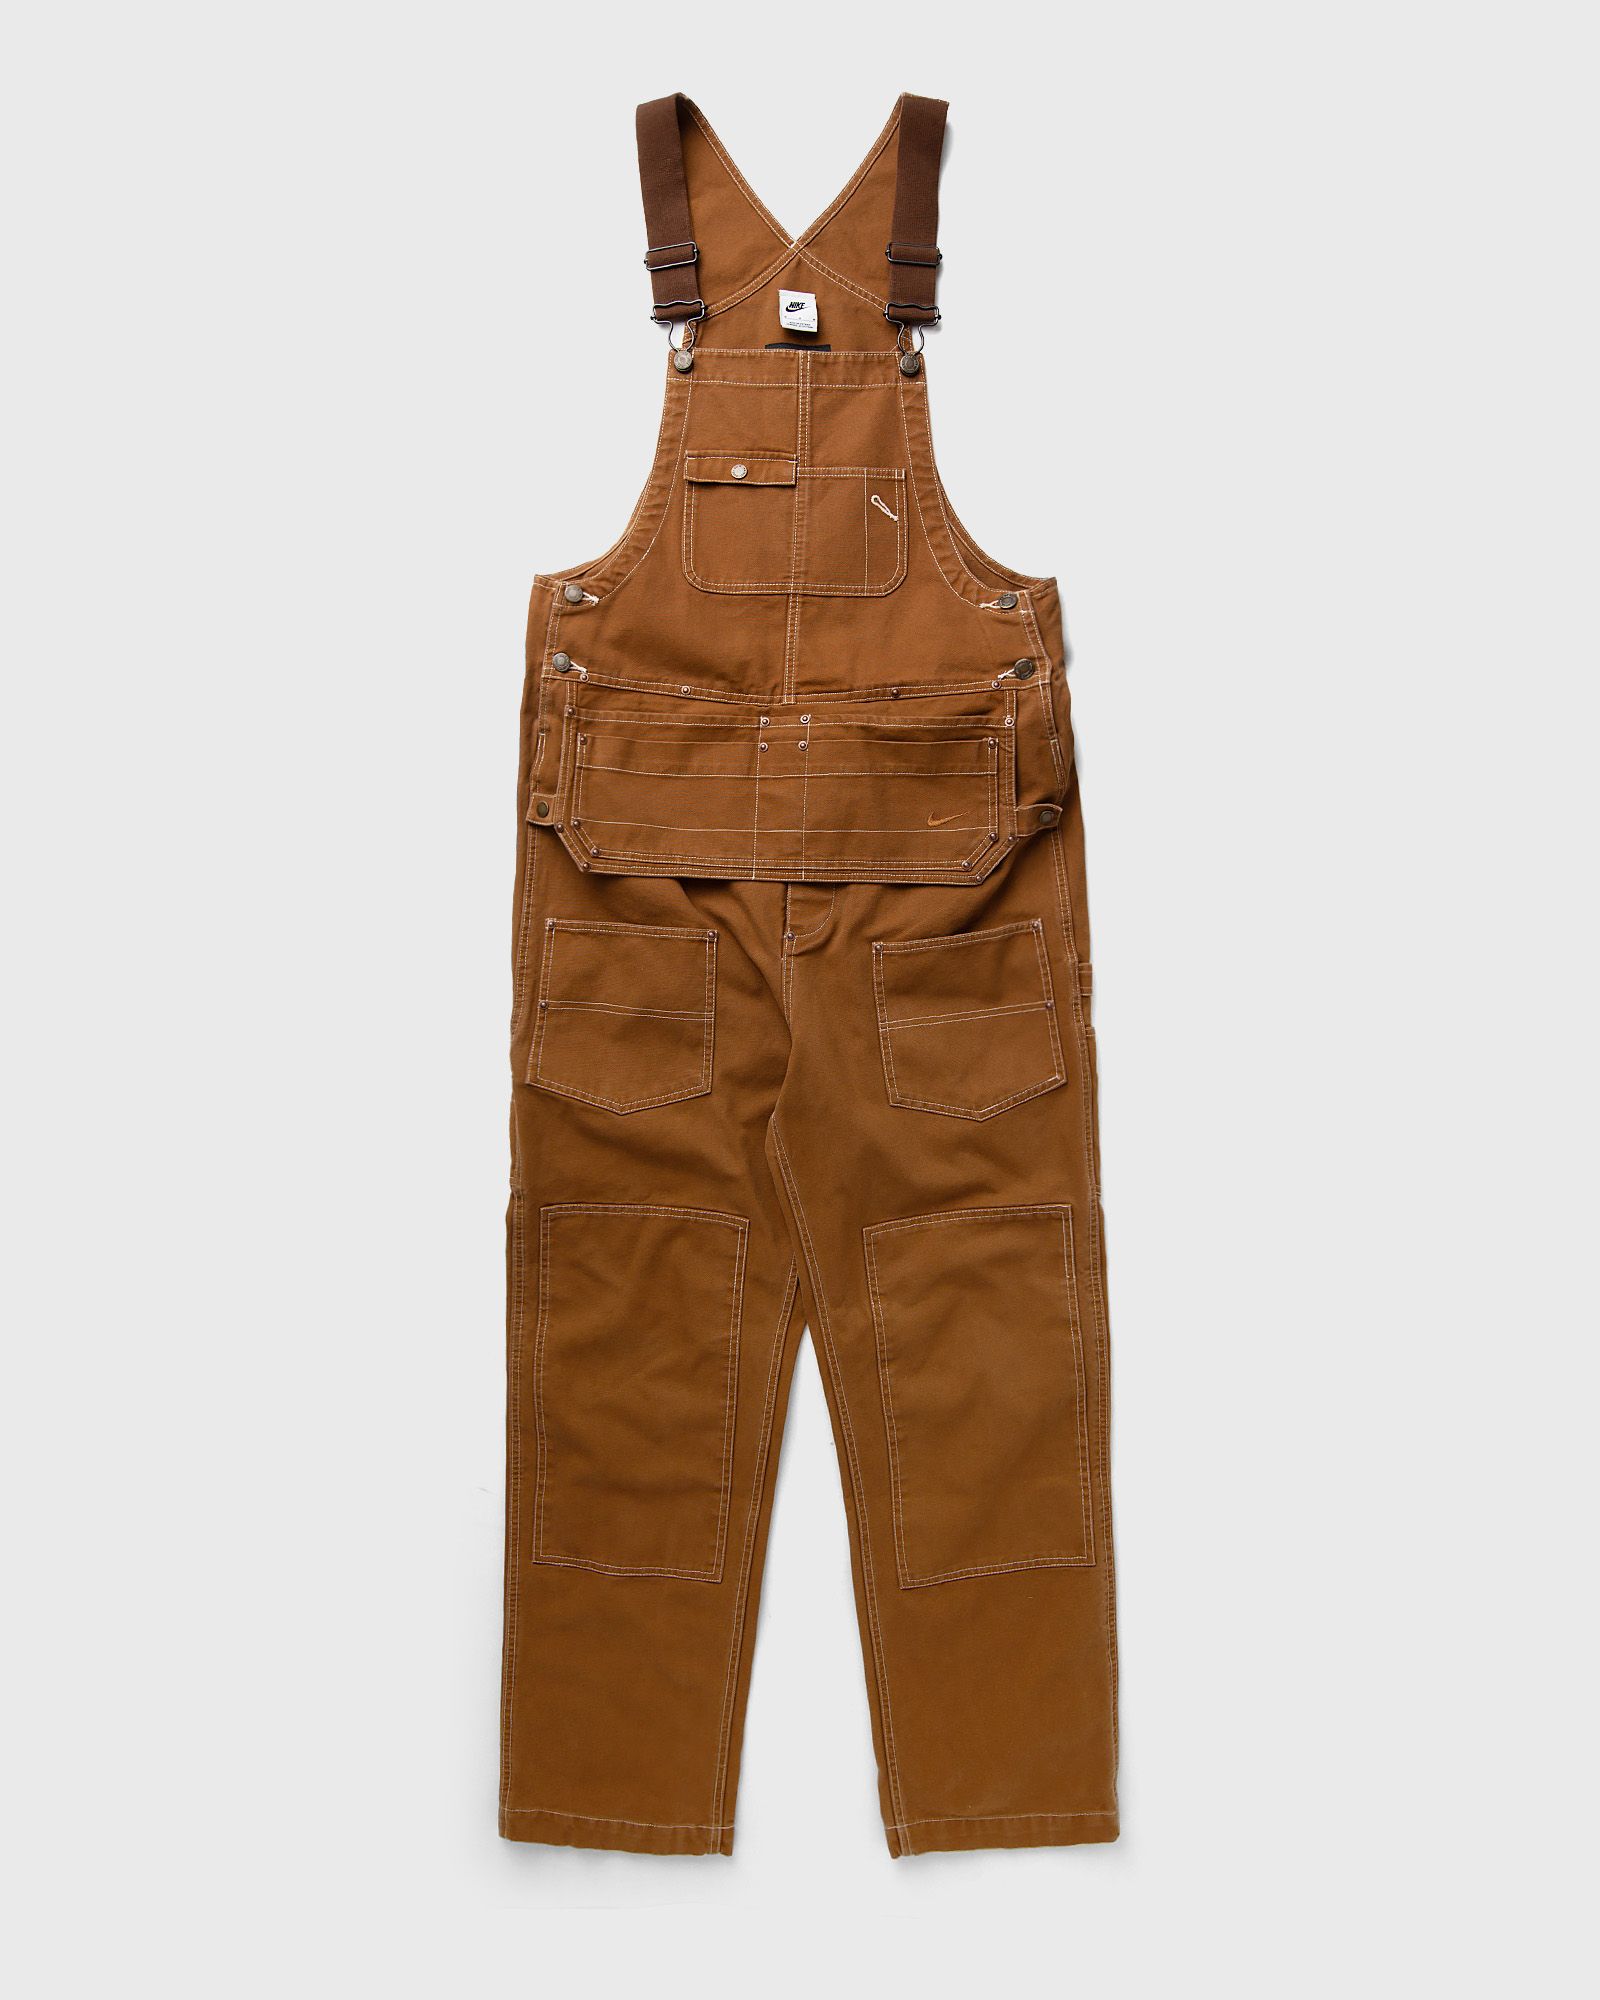 Nike - m nl carpenter overall men casual pants brown in größe:xxl